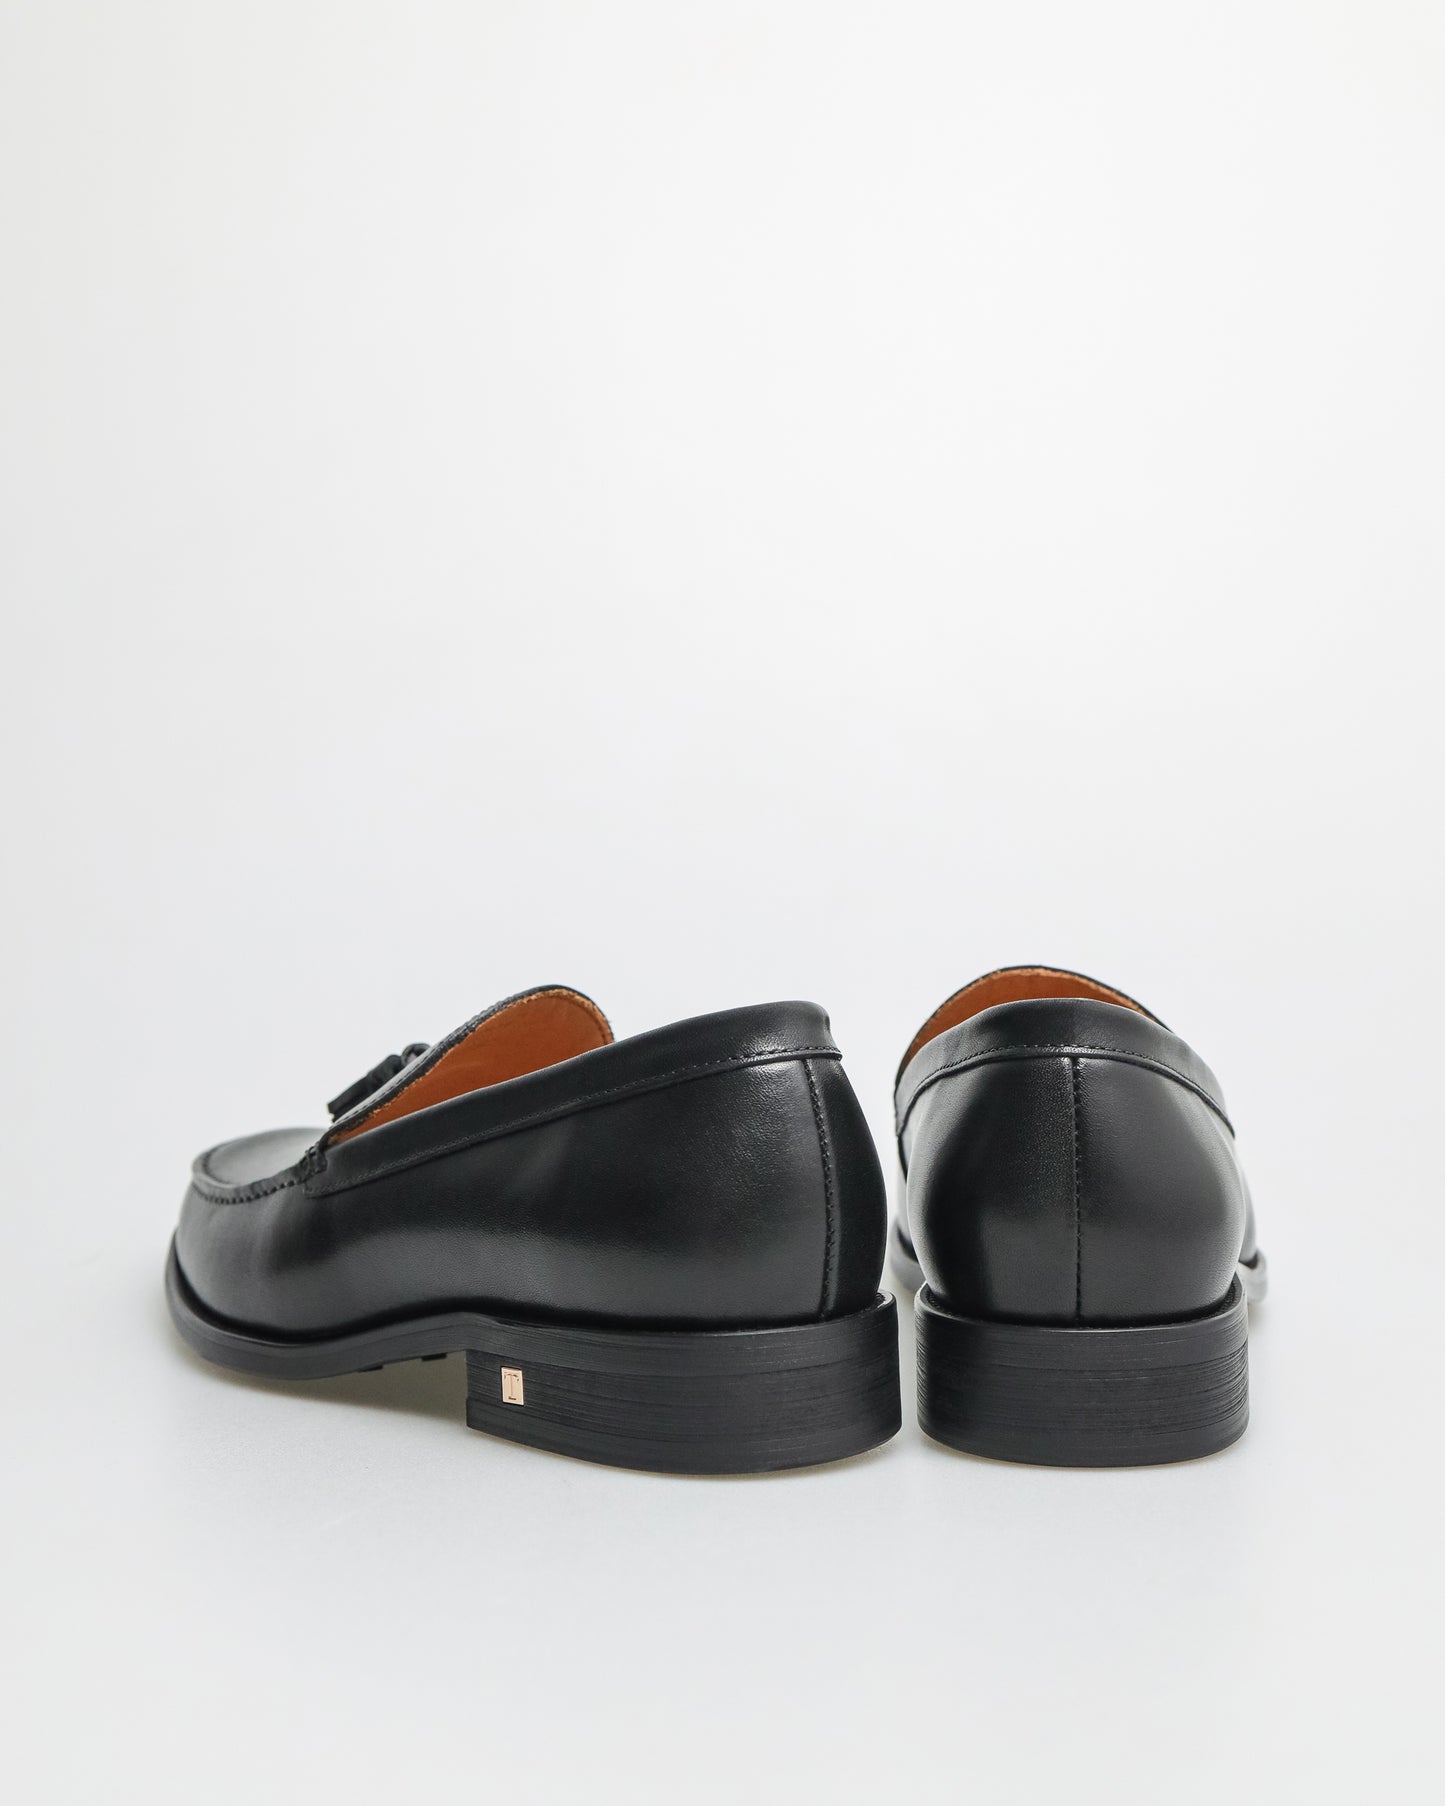 Tomaz F251 Tassel Loafers (Black)